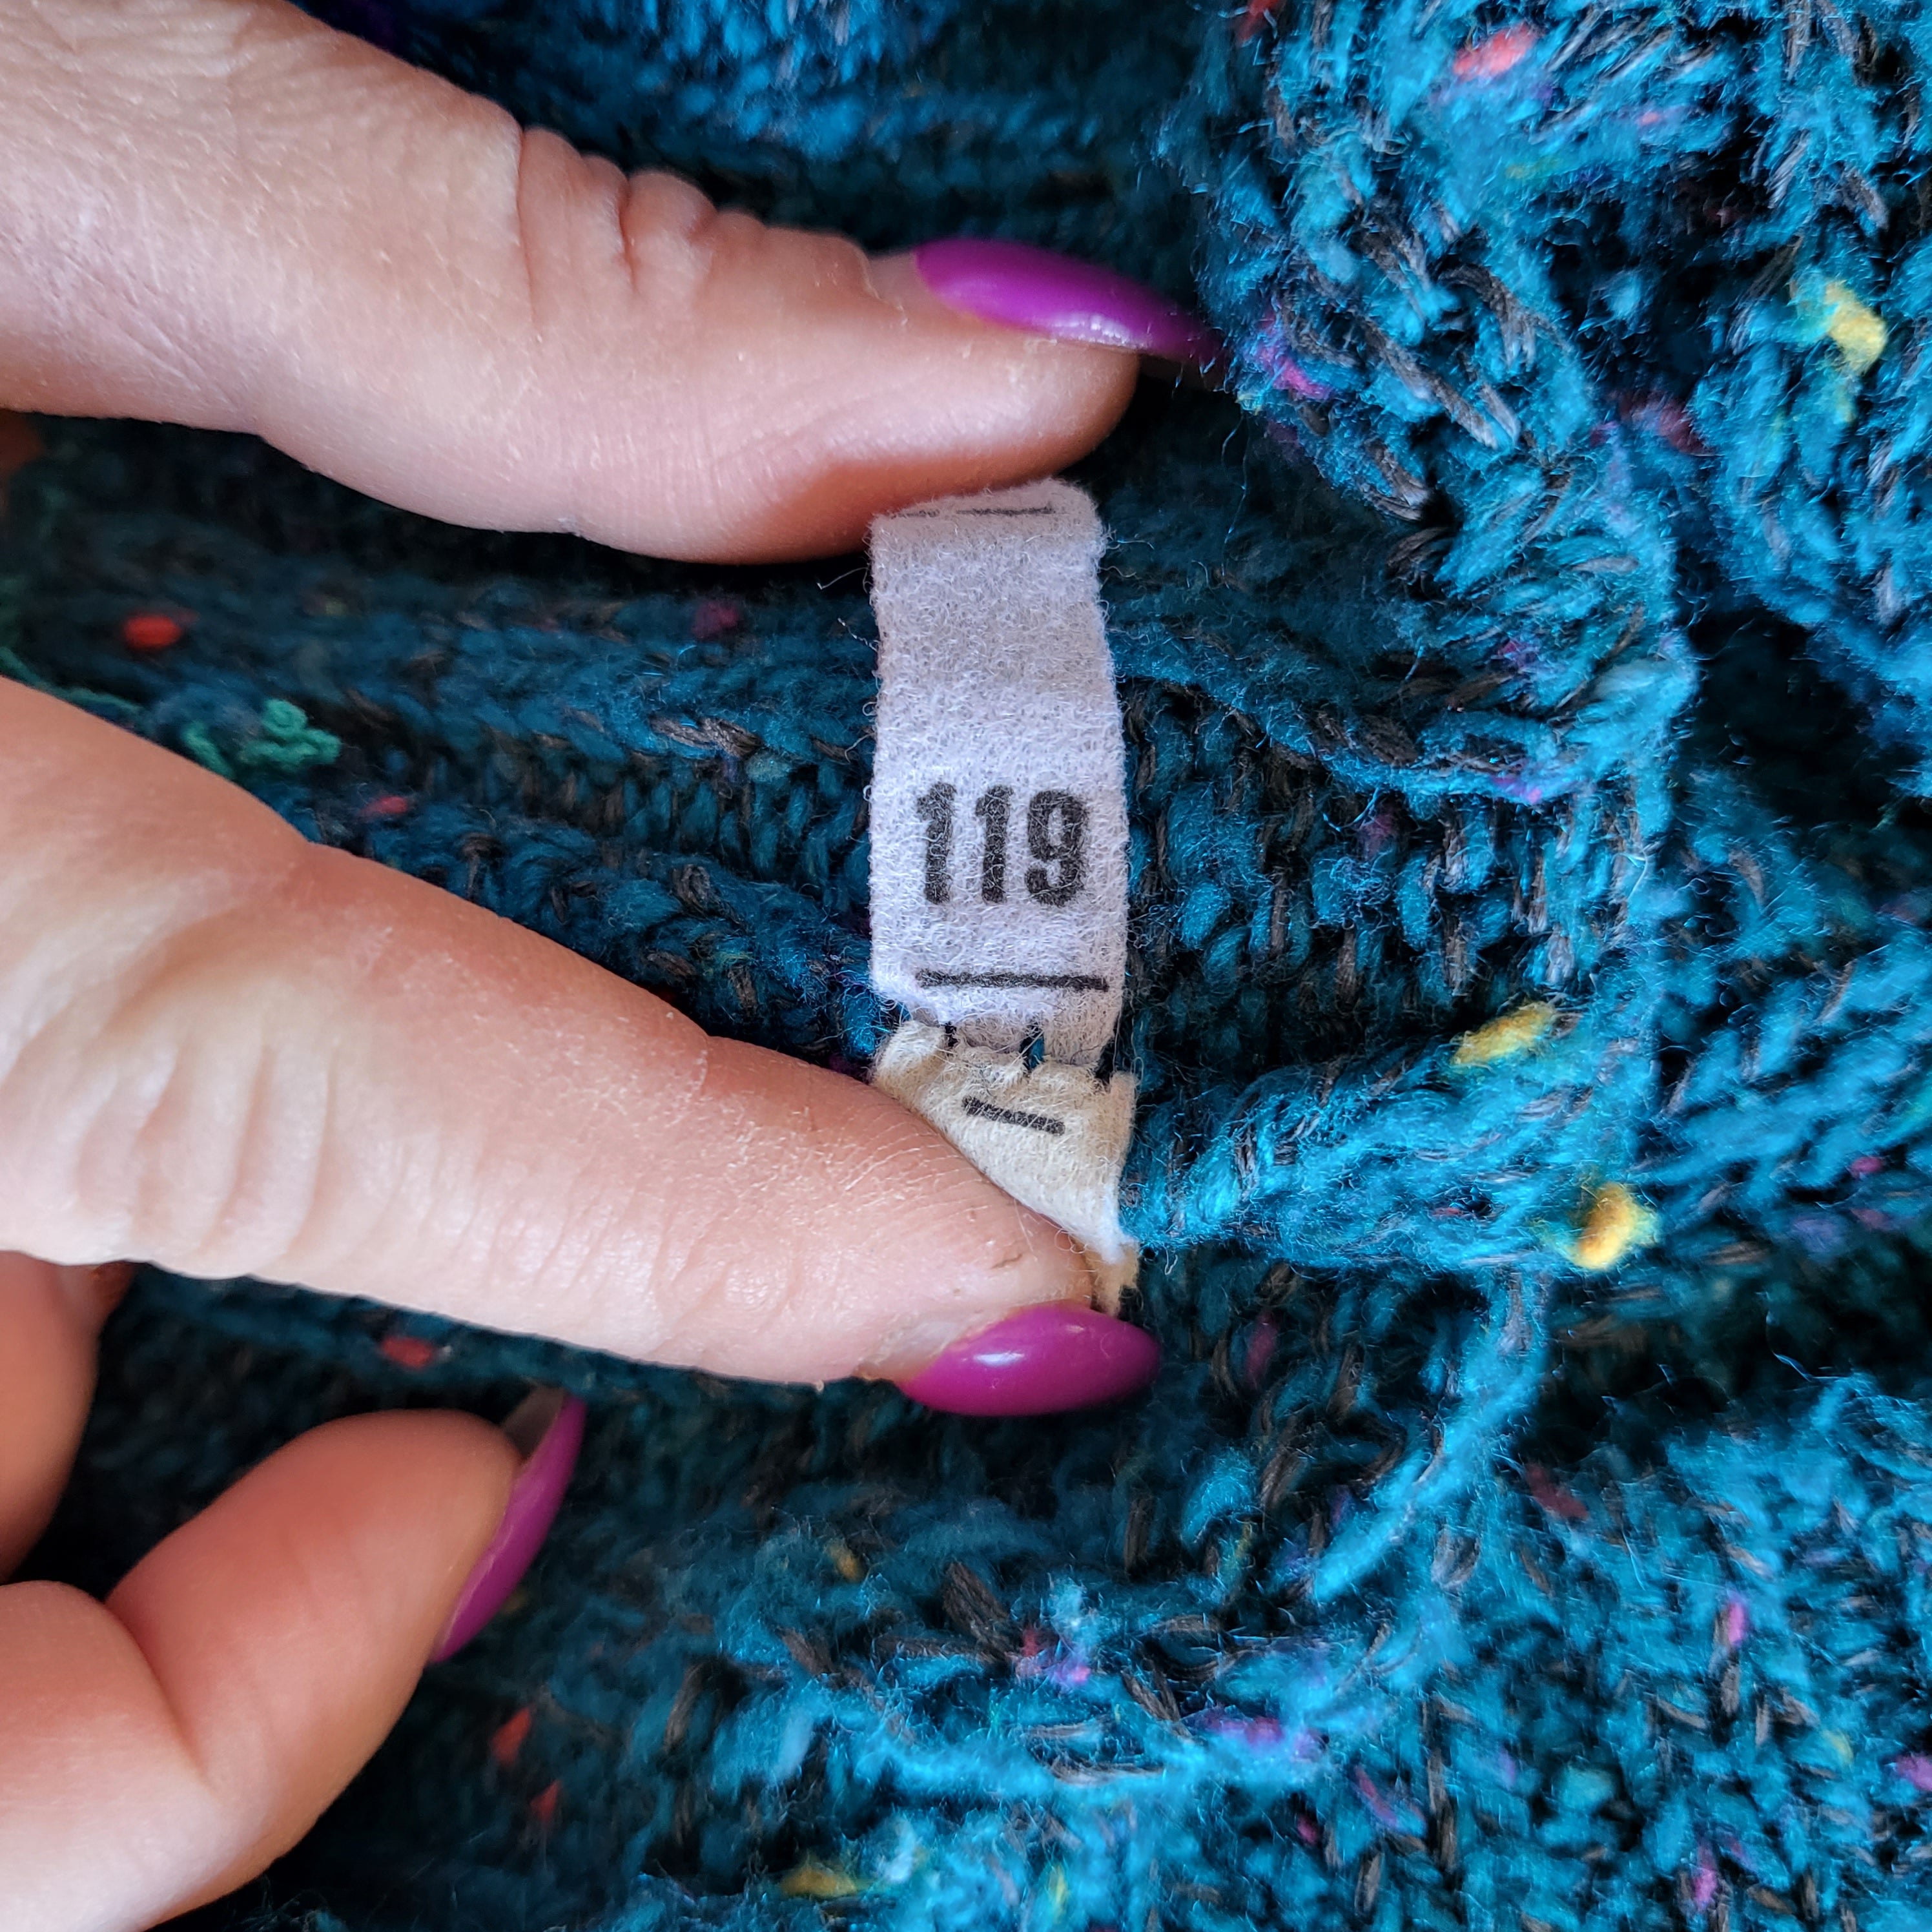 Allison Smith Cable Knit Popcorn Confetti Split Turtleneck Sweater Size Medium